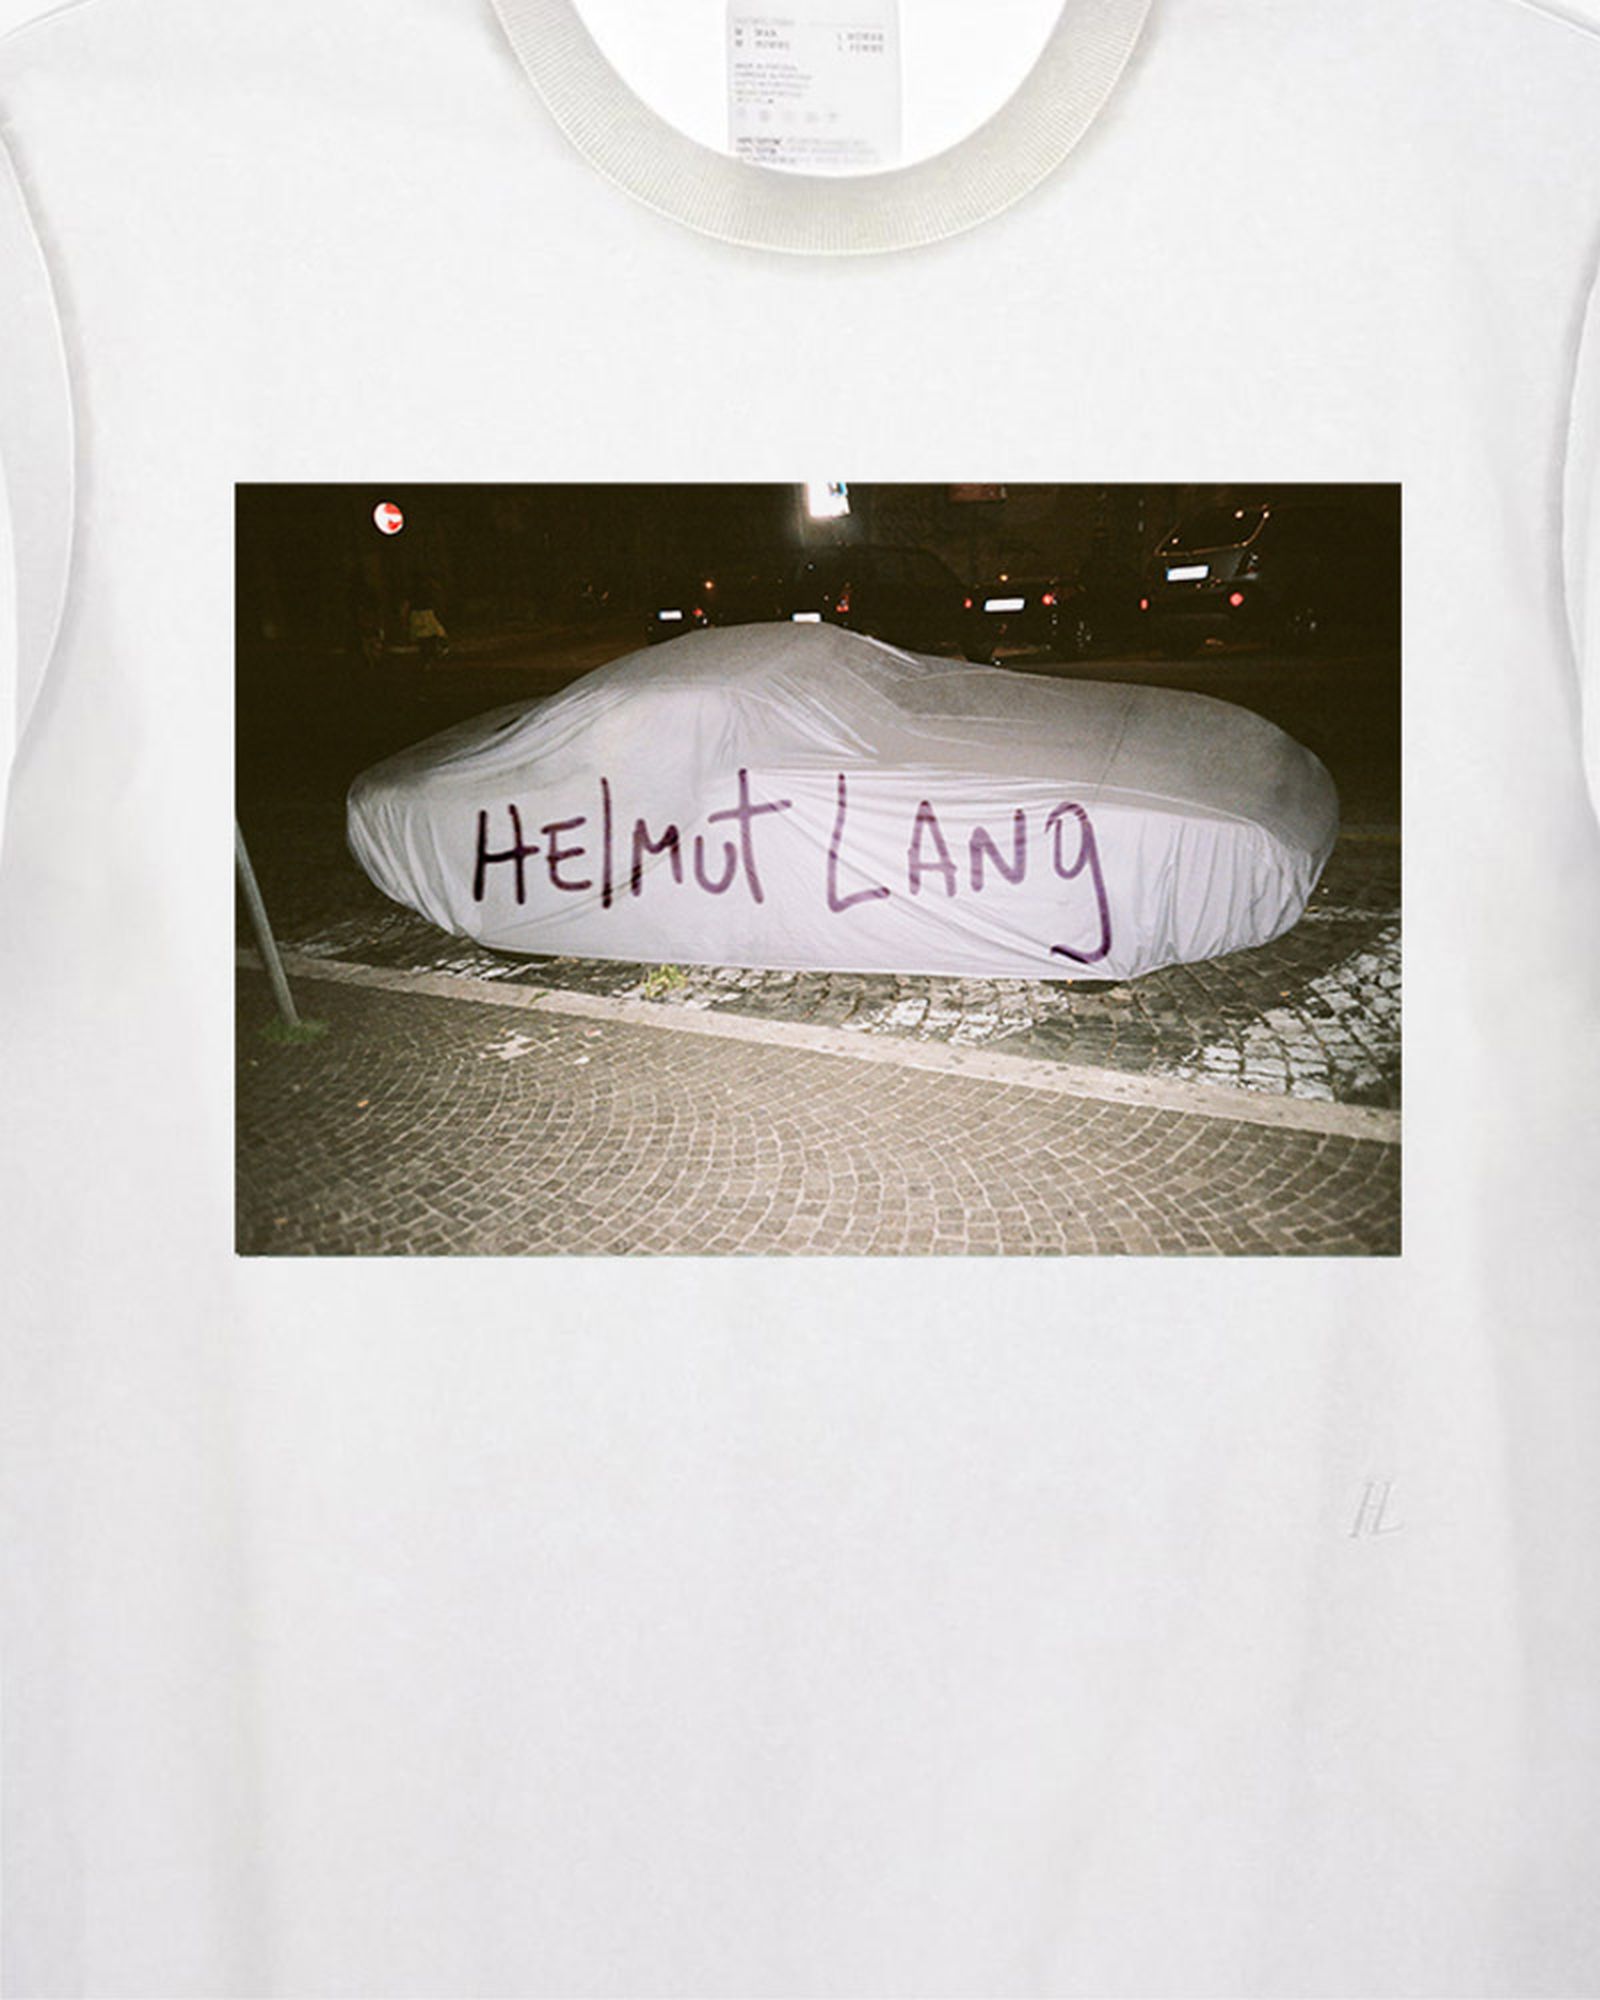 24helmut-lang-t-shirt-design-competition